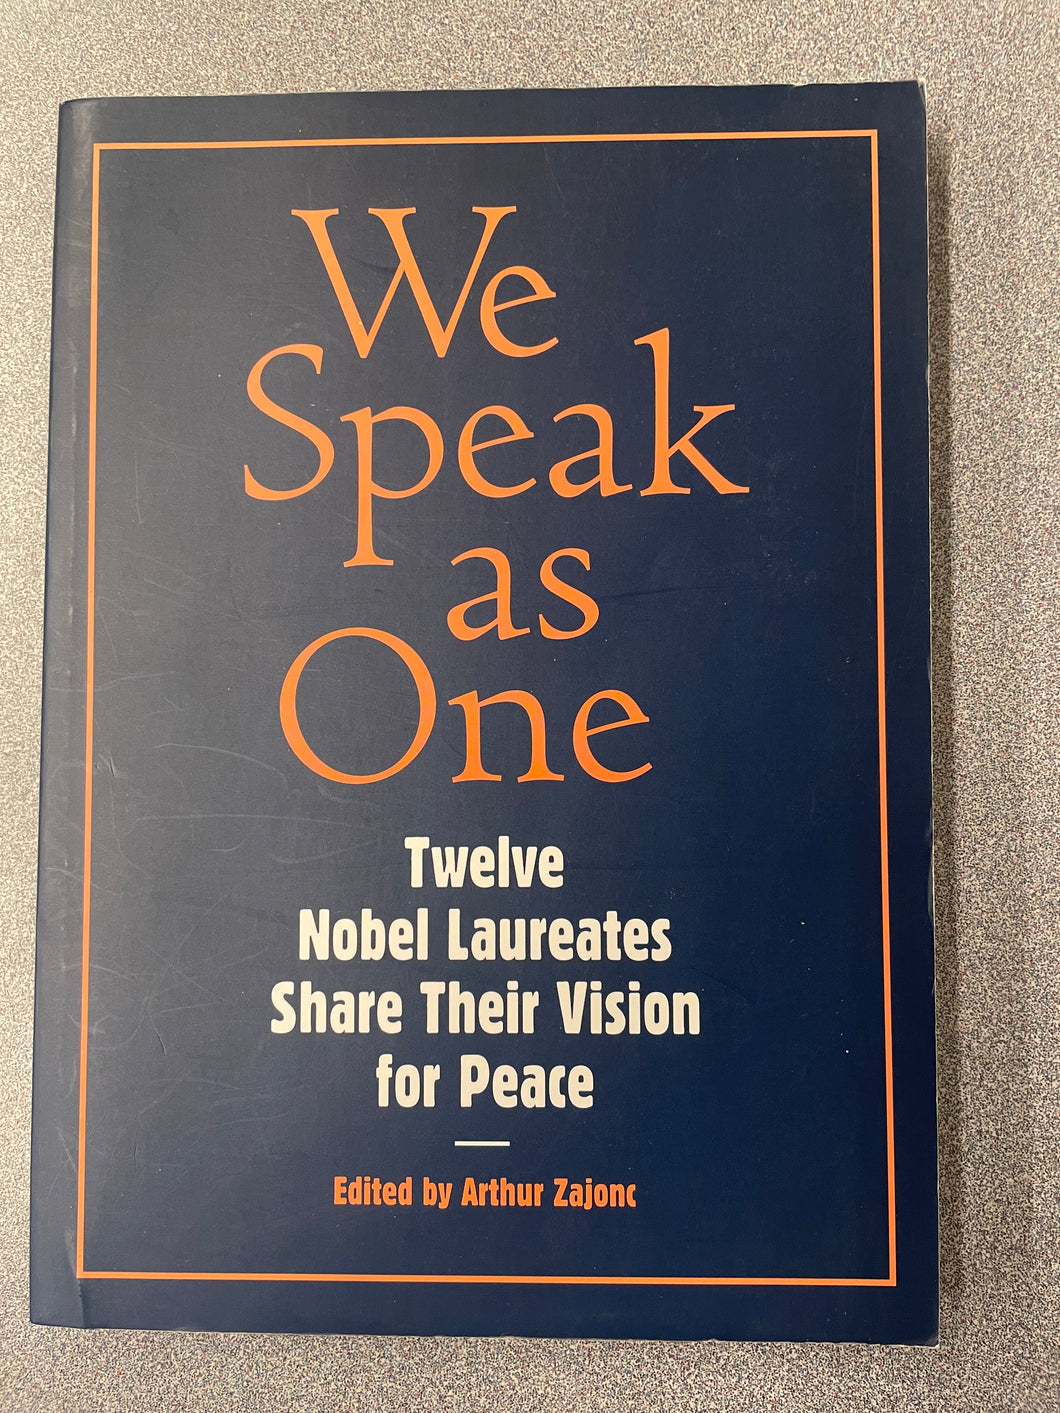 AN  We Speak As One: Twelve Nobel Laureates Share Their Vision For Peace, Zajonc, Arthur, ed. [2006] N 3/24